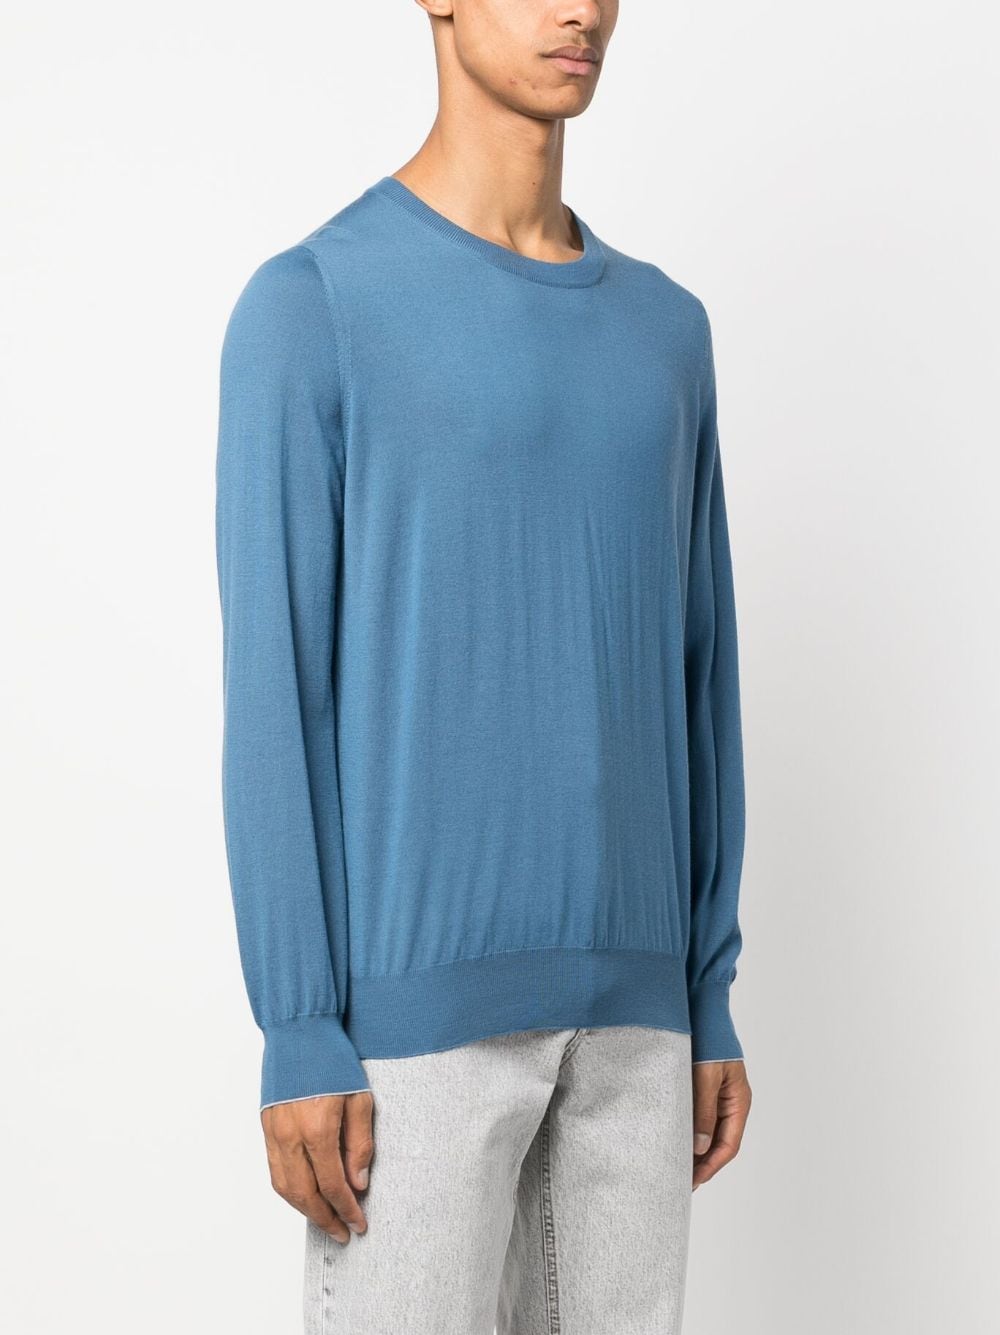 Brunello Cucinelli Sweater in Imperial Blue